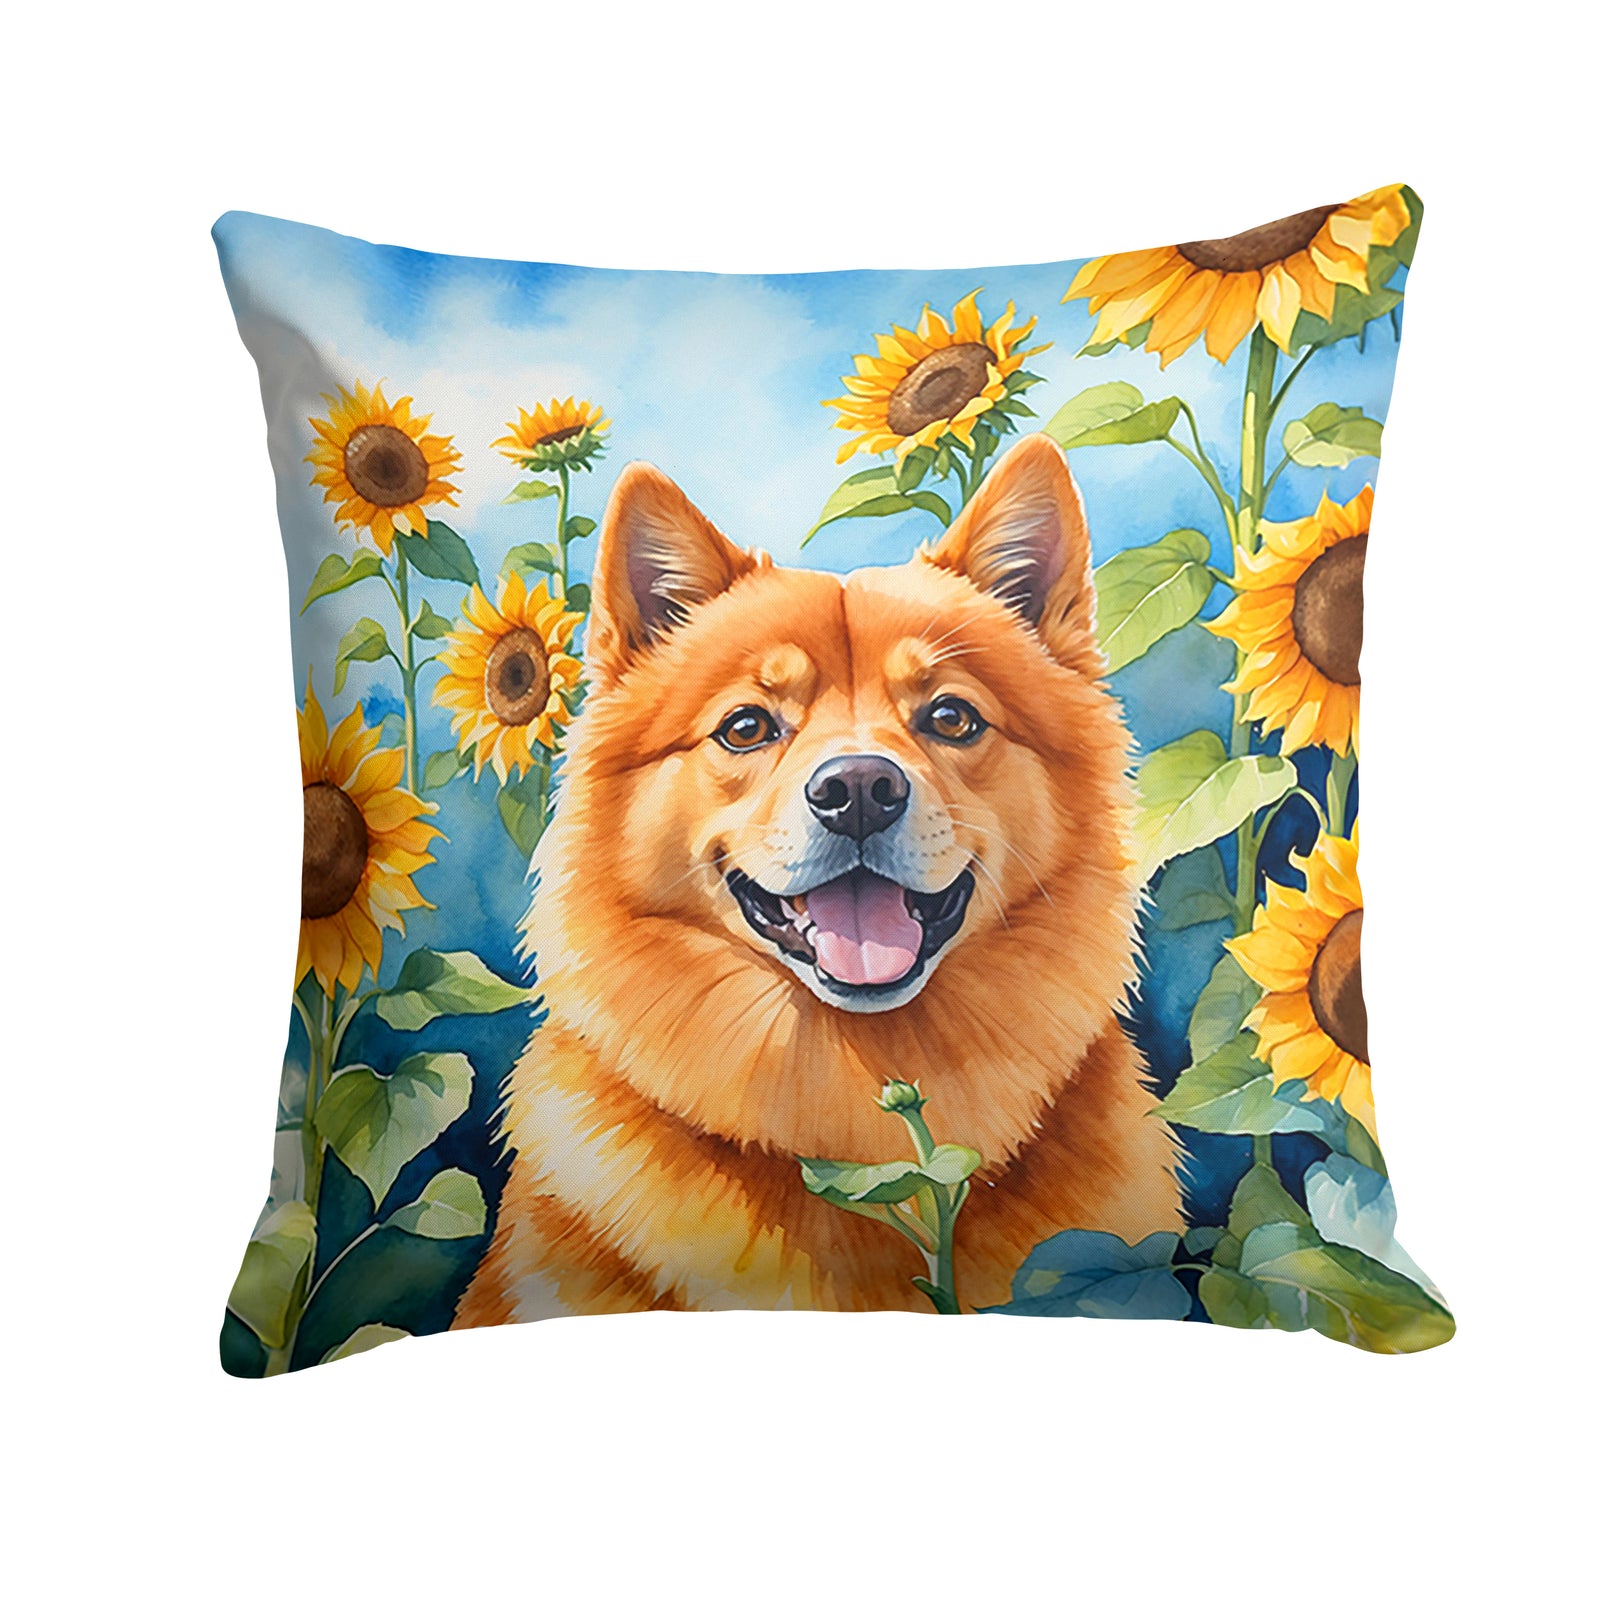 Buy this Finnish Spitz in Sunflowers Throw Pillow